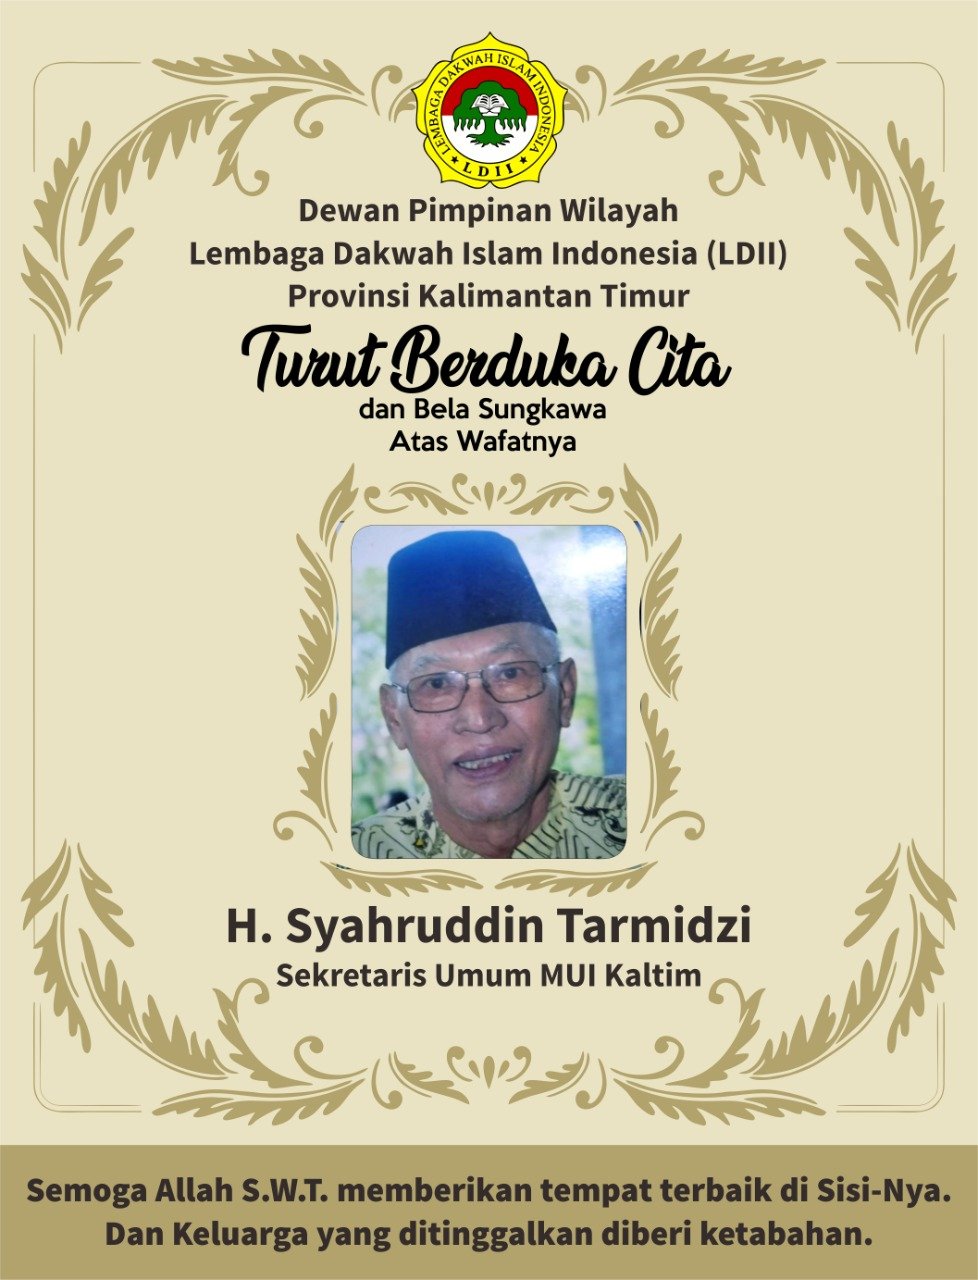 Turut berduka cita atas wafatnya H. Syahruddin Tarmidzi